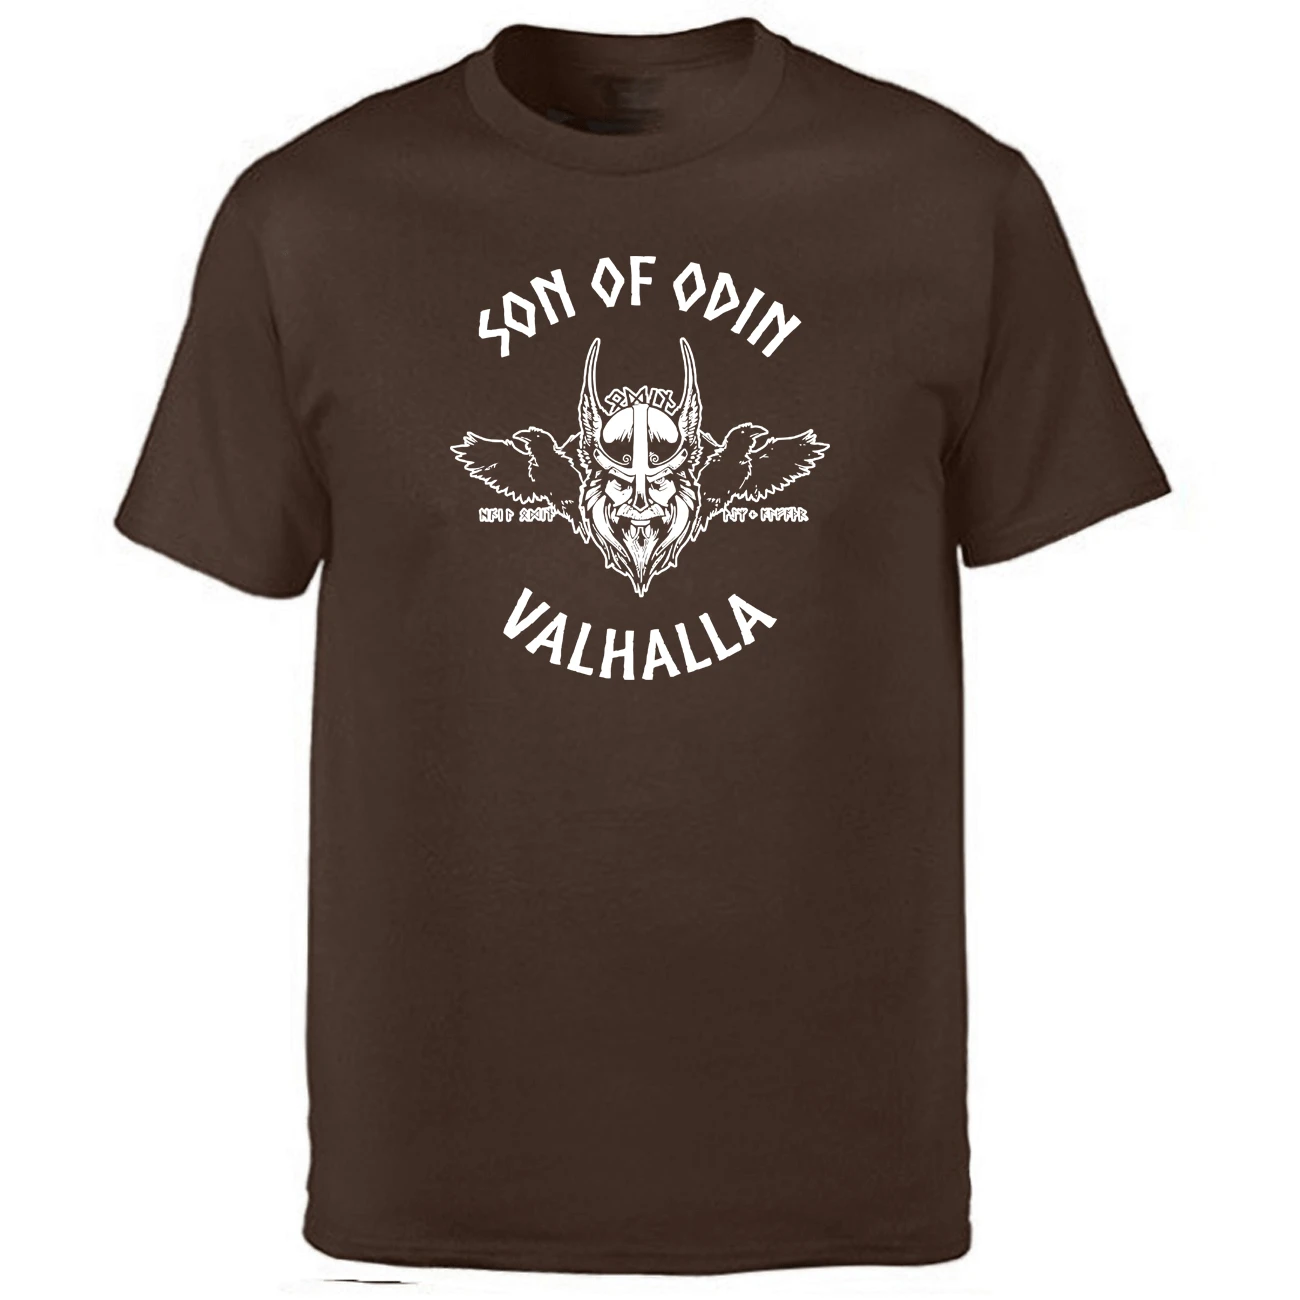 Футболка Odin Vikings Gone to Valhalla, Мужская футболка Son Of Odin, летняя черная футболка с коротким рукавом и принтом, топ с надписью «Sons Of Anarchy Chapter» - Цвет: Brown 5